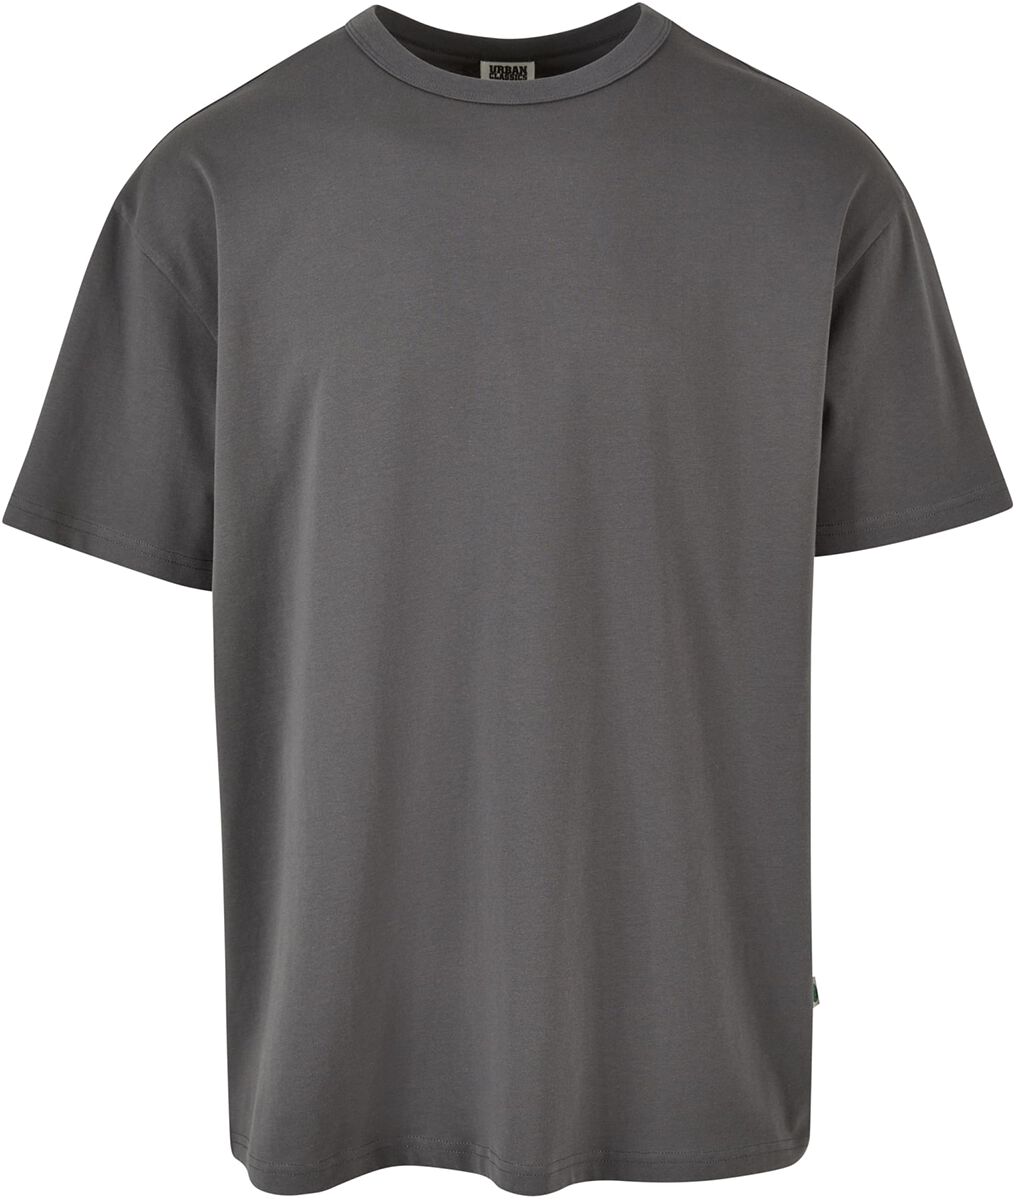 Urban Classics T-Shirt - Organic Basic Tee - S bis XL - für Männer - Größe L - dunkelgrau